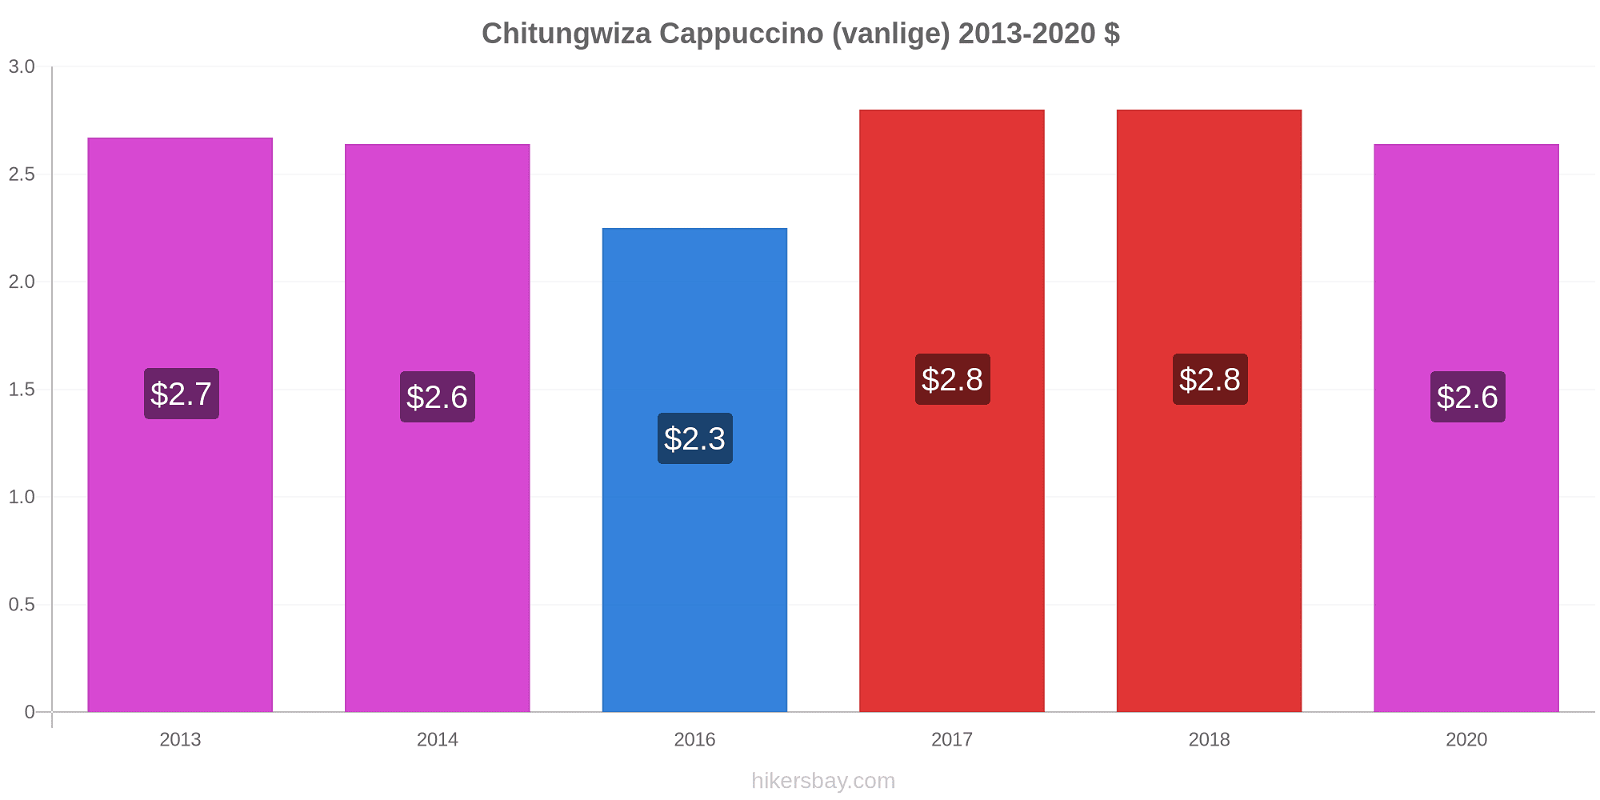 Chitungwiza prisendringer Cappuccino (vanlige) hikersbay.com